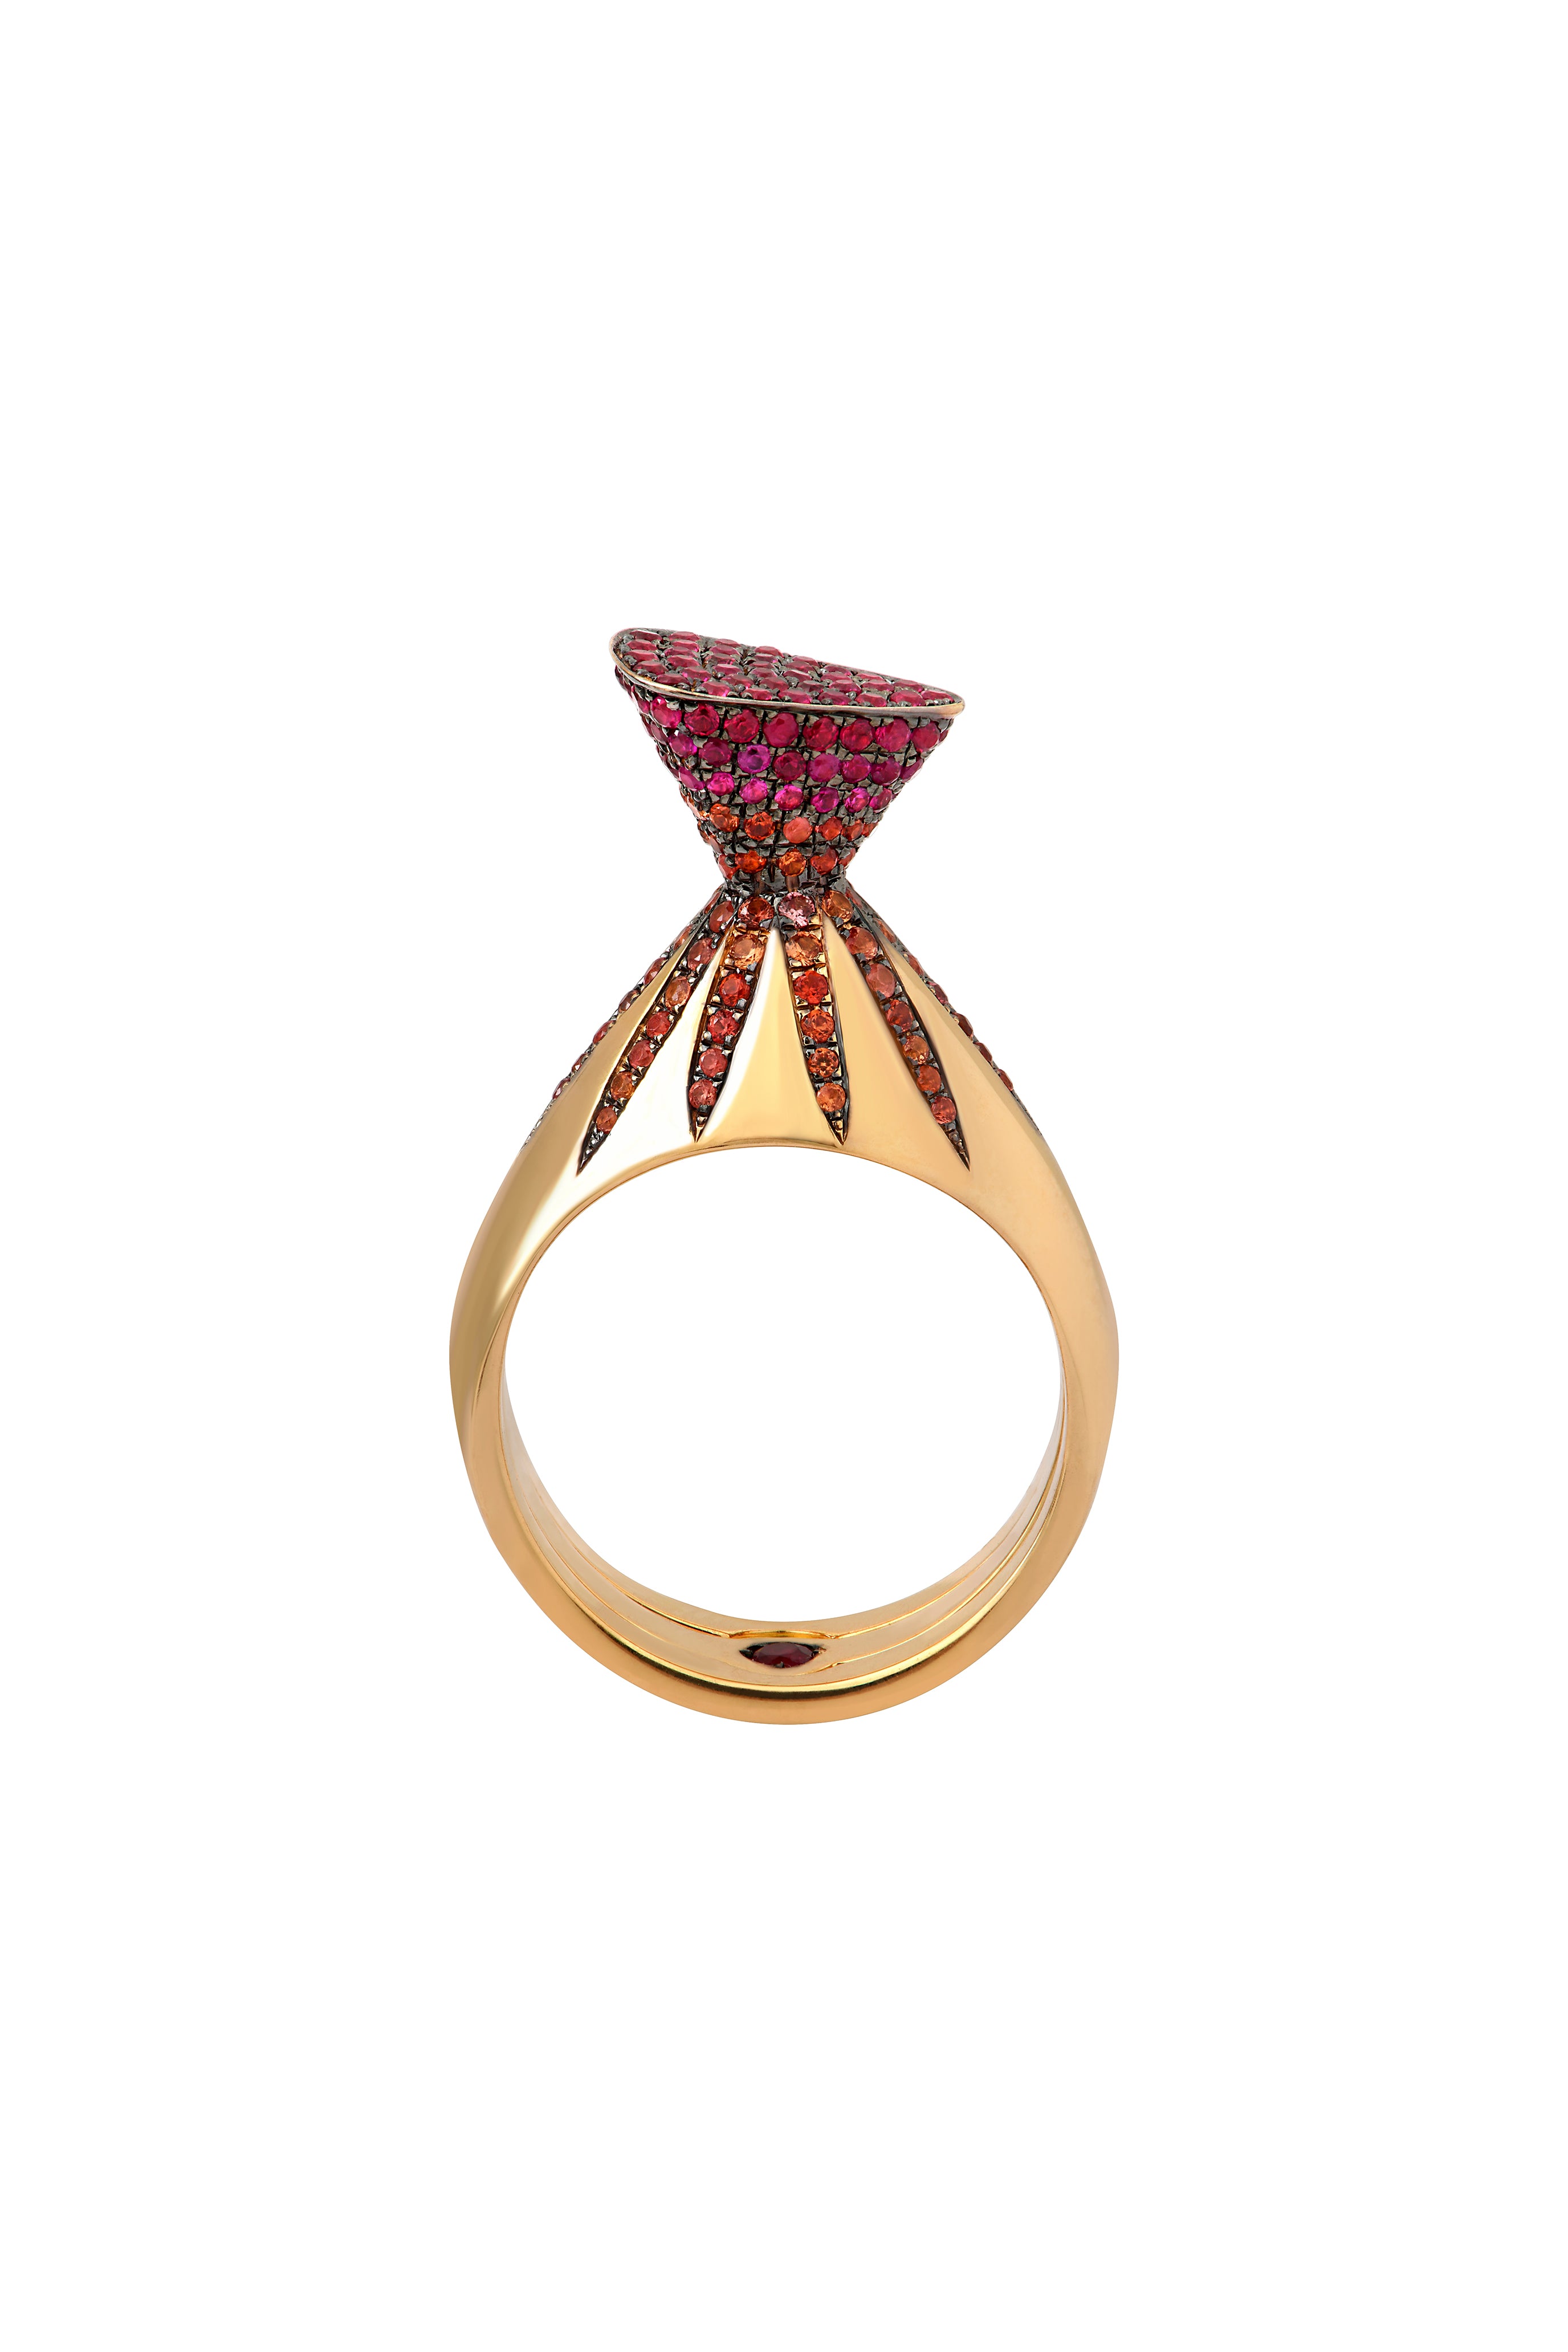 Banu Lucis ruby ring